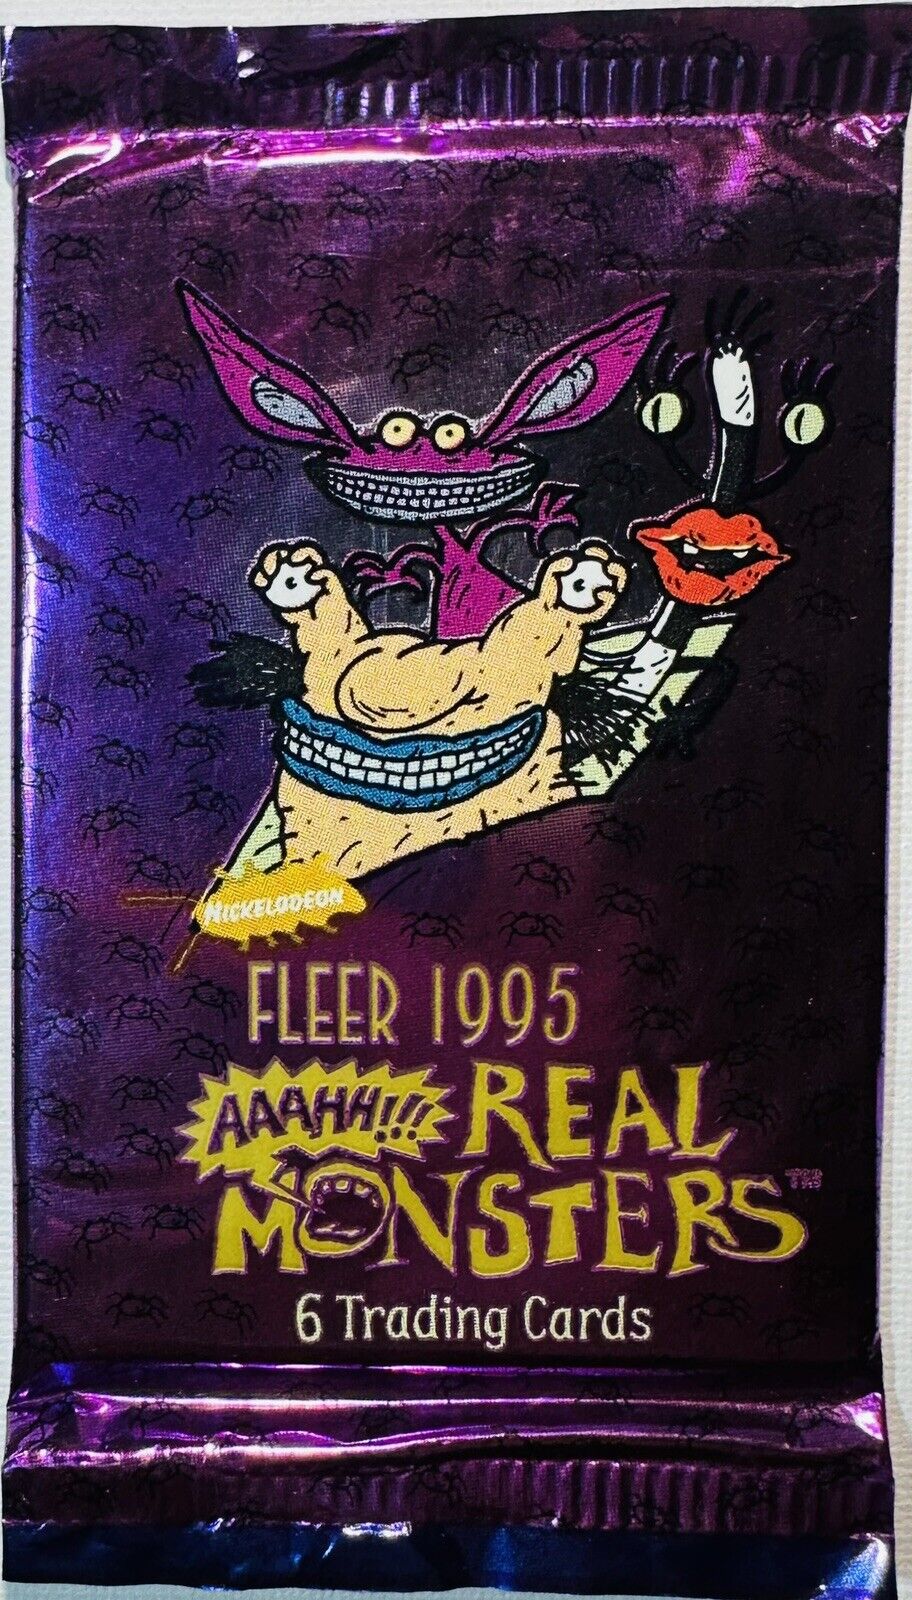 Aaahh Real Monsters (1995) Fleer Trading Cards Unopened Pack 